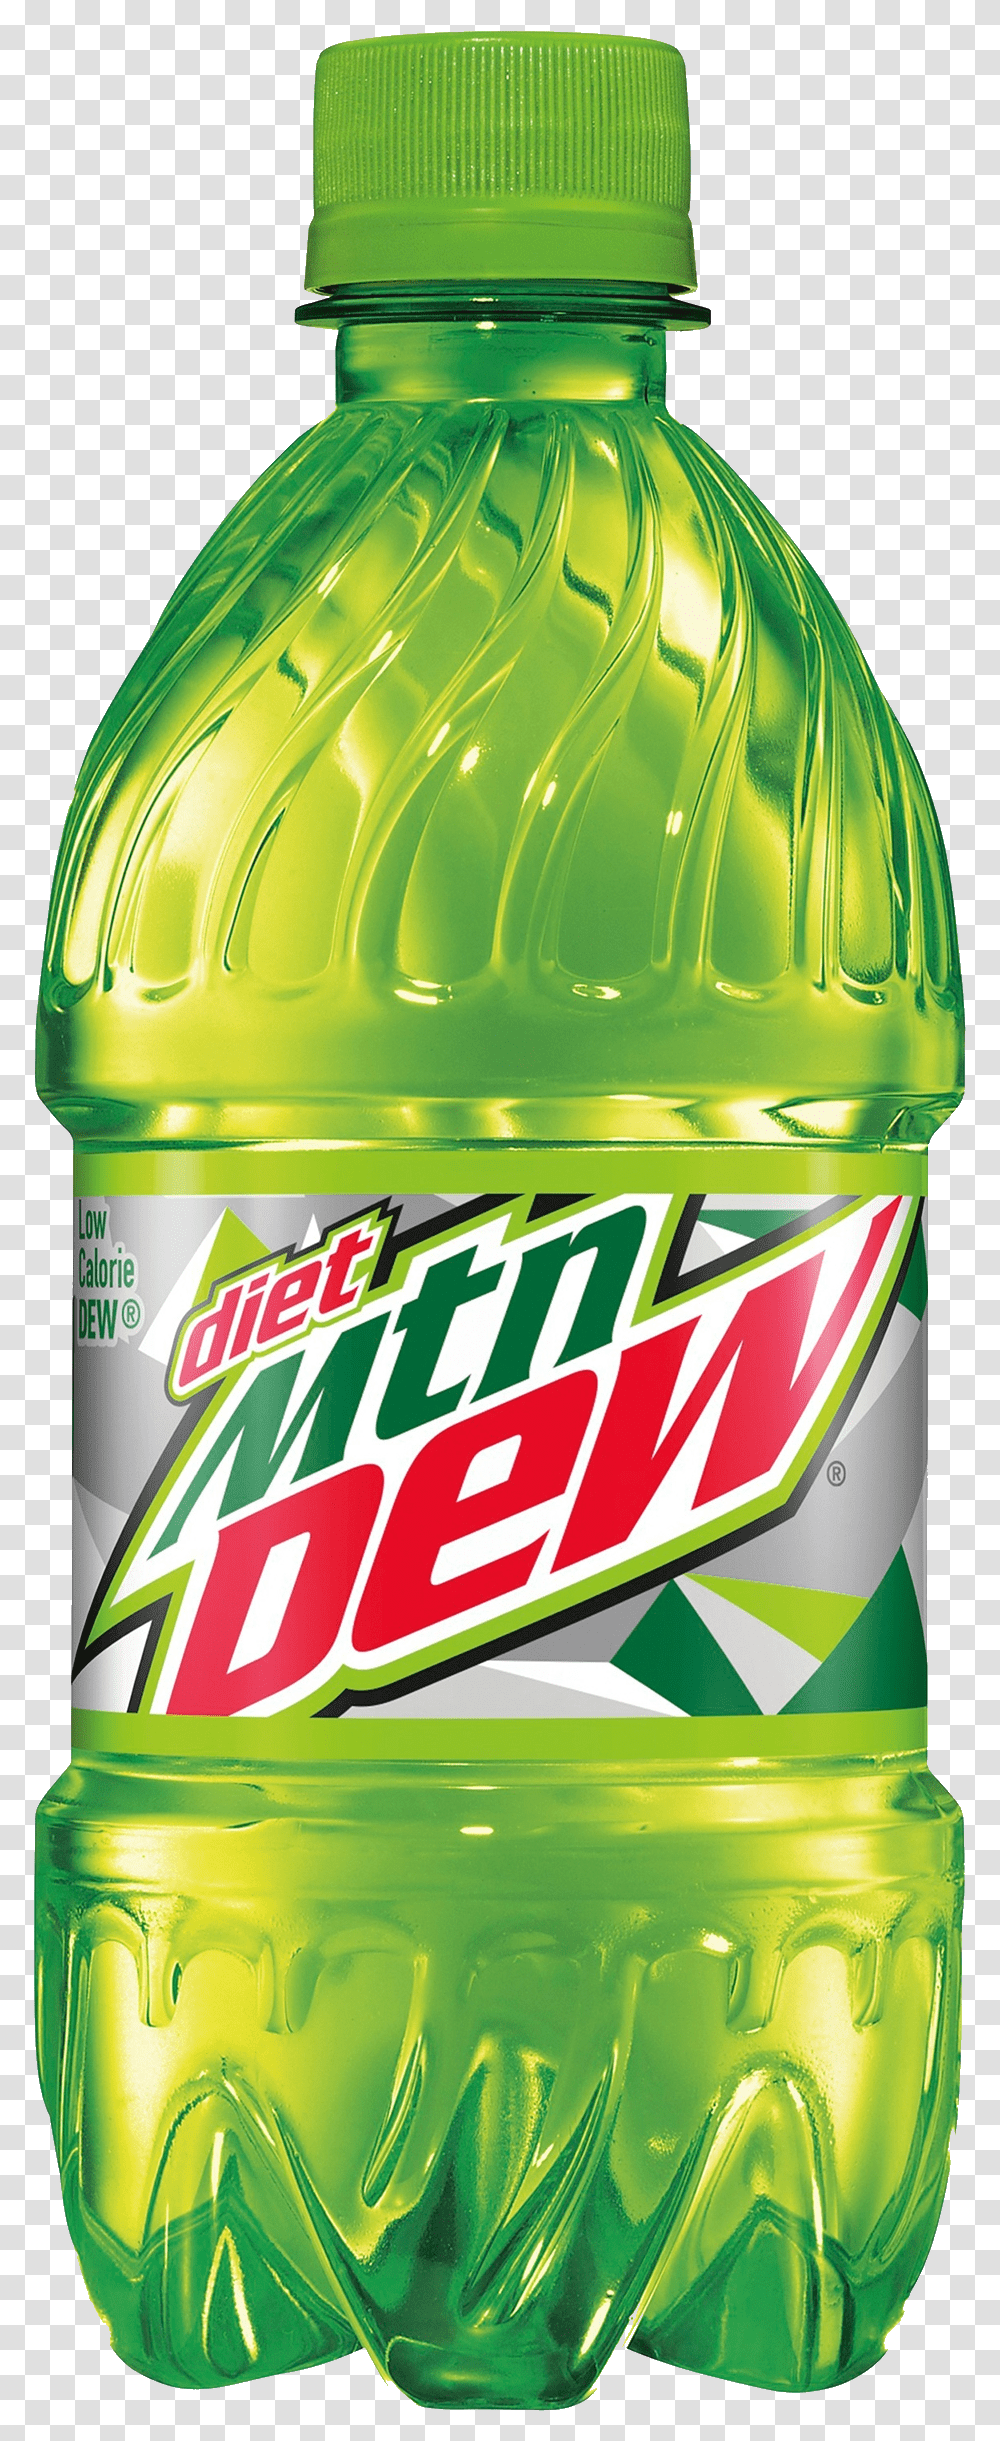 Diet Mountain Dew 12 Oz Bottle Design Mountain Dew Zero Sugar Review, Beverage, Drink, Soda, Pop Bottle Transparent Png